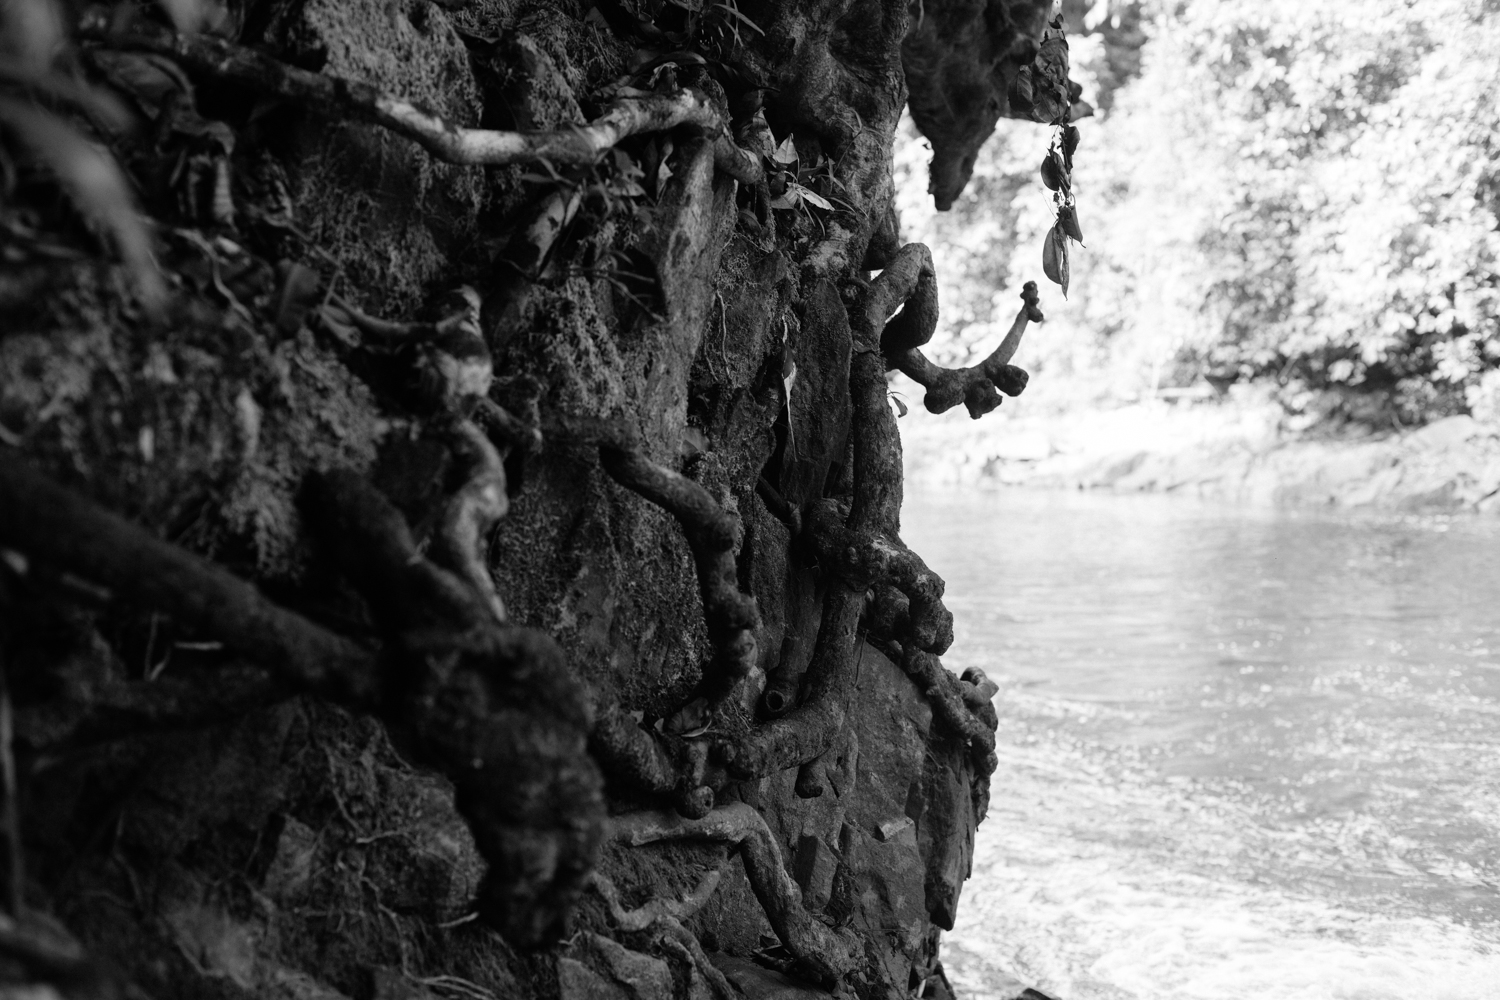 Roots used as rails, Kwa Falls